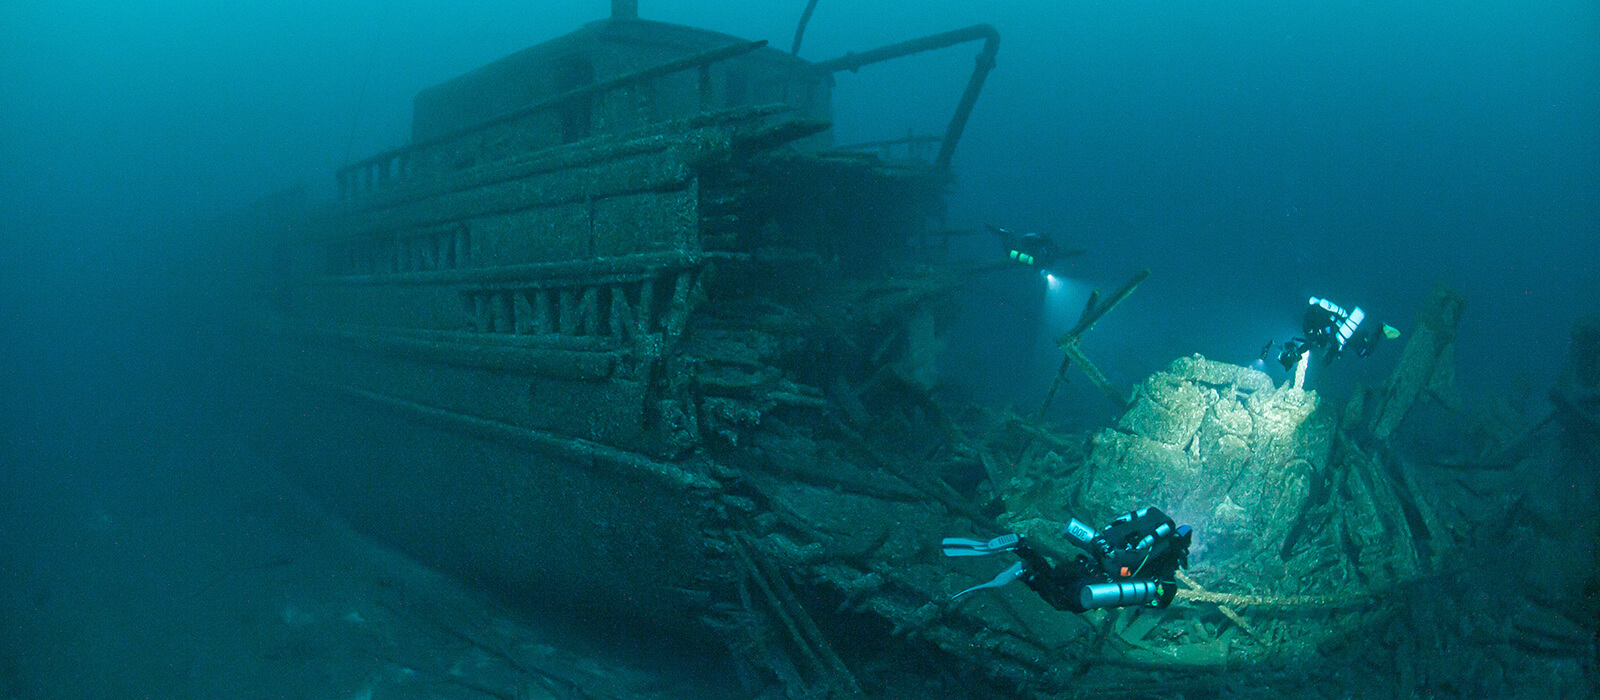 3 Divers shine lights on a shipwreck